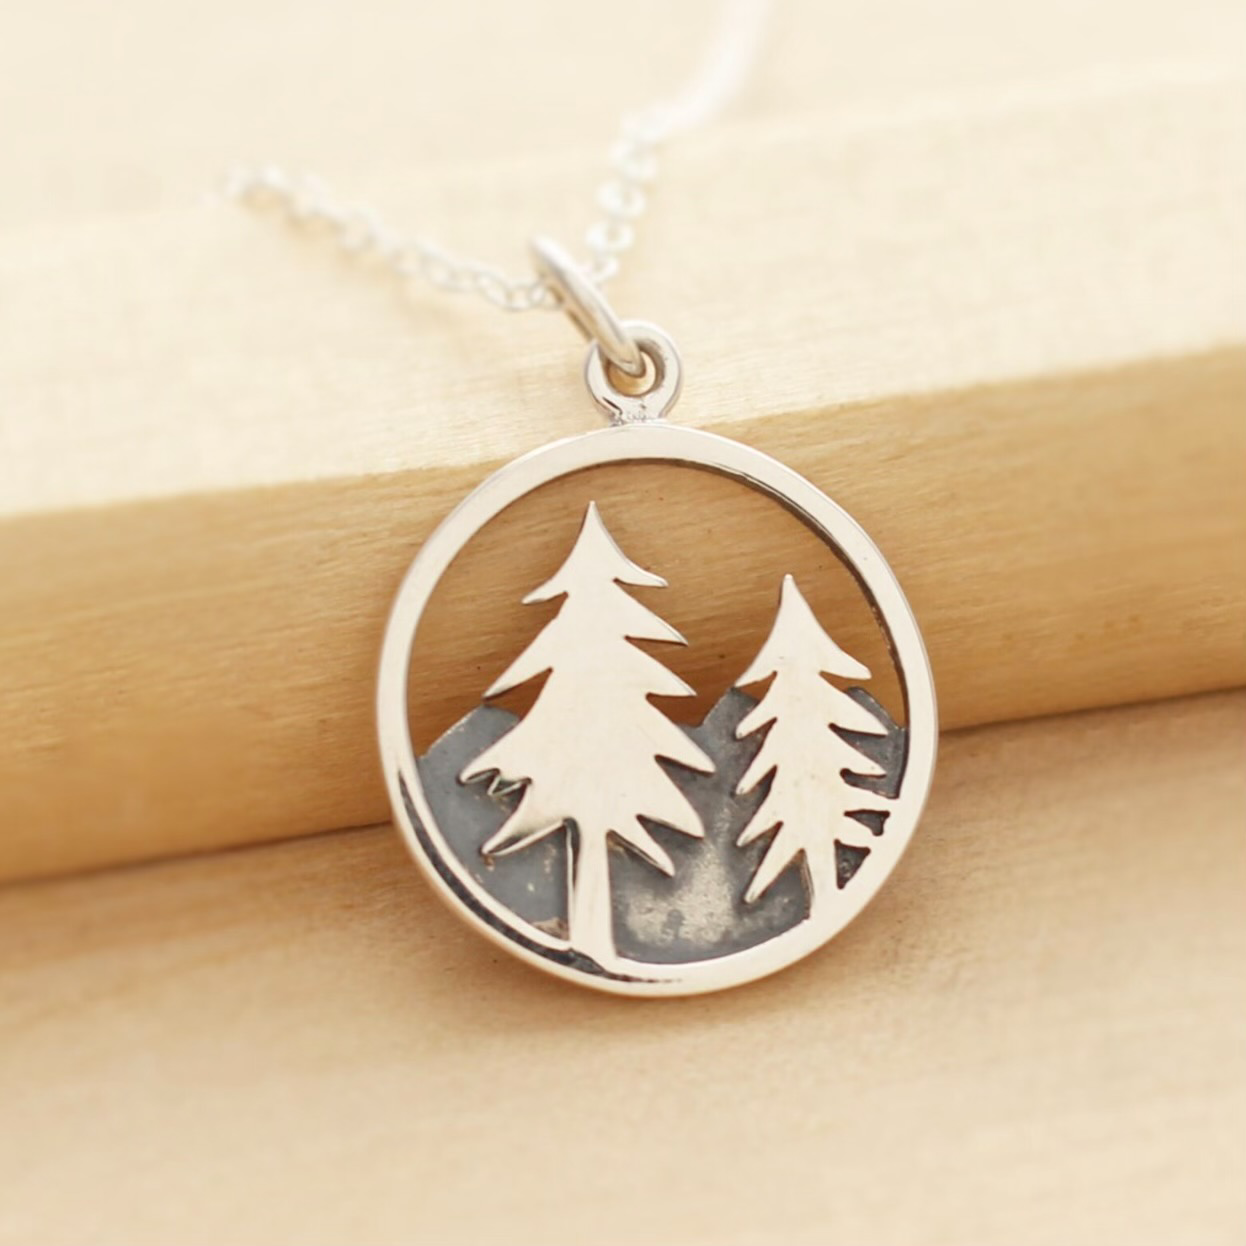 Pine Tree Mountain Range Necklace